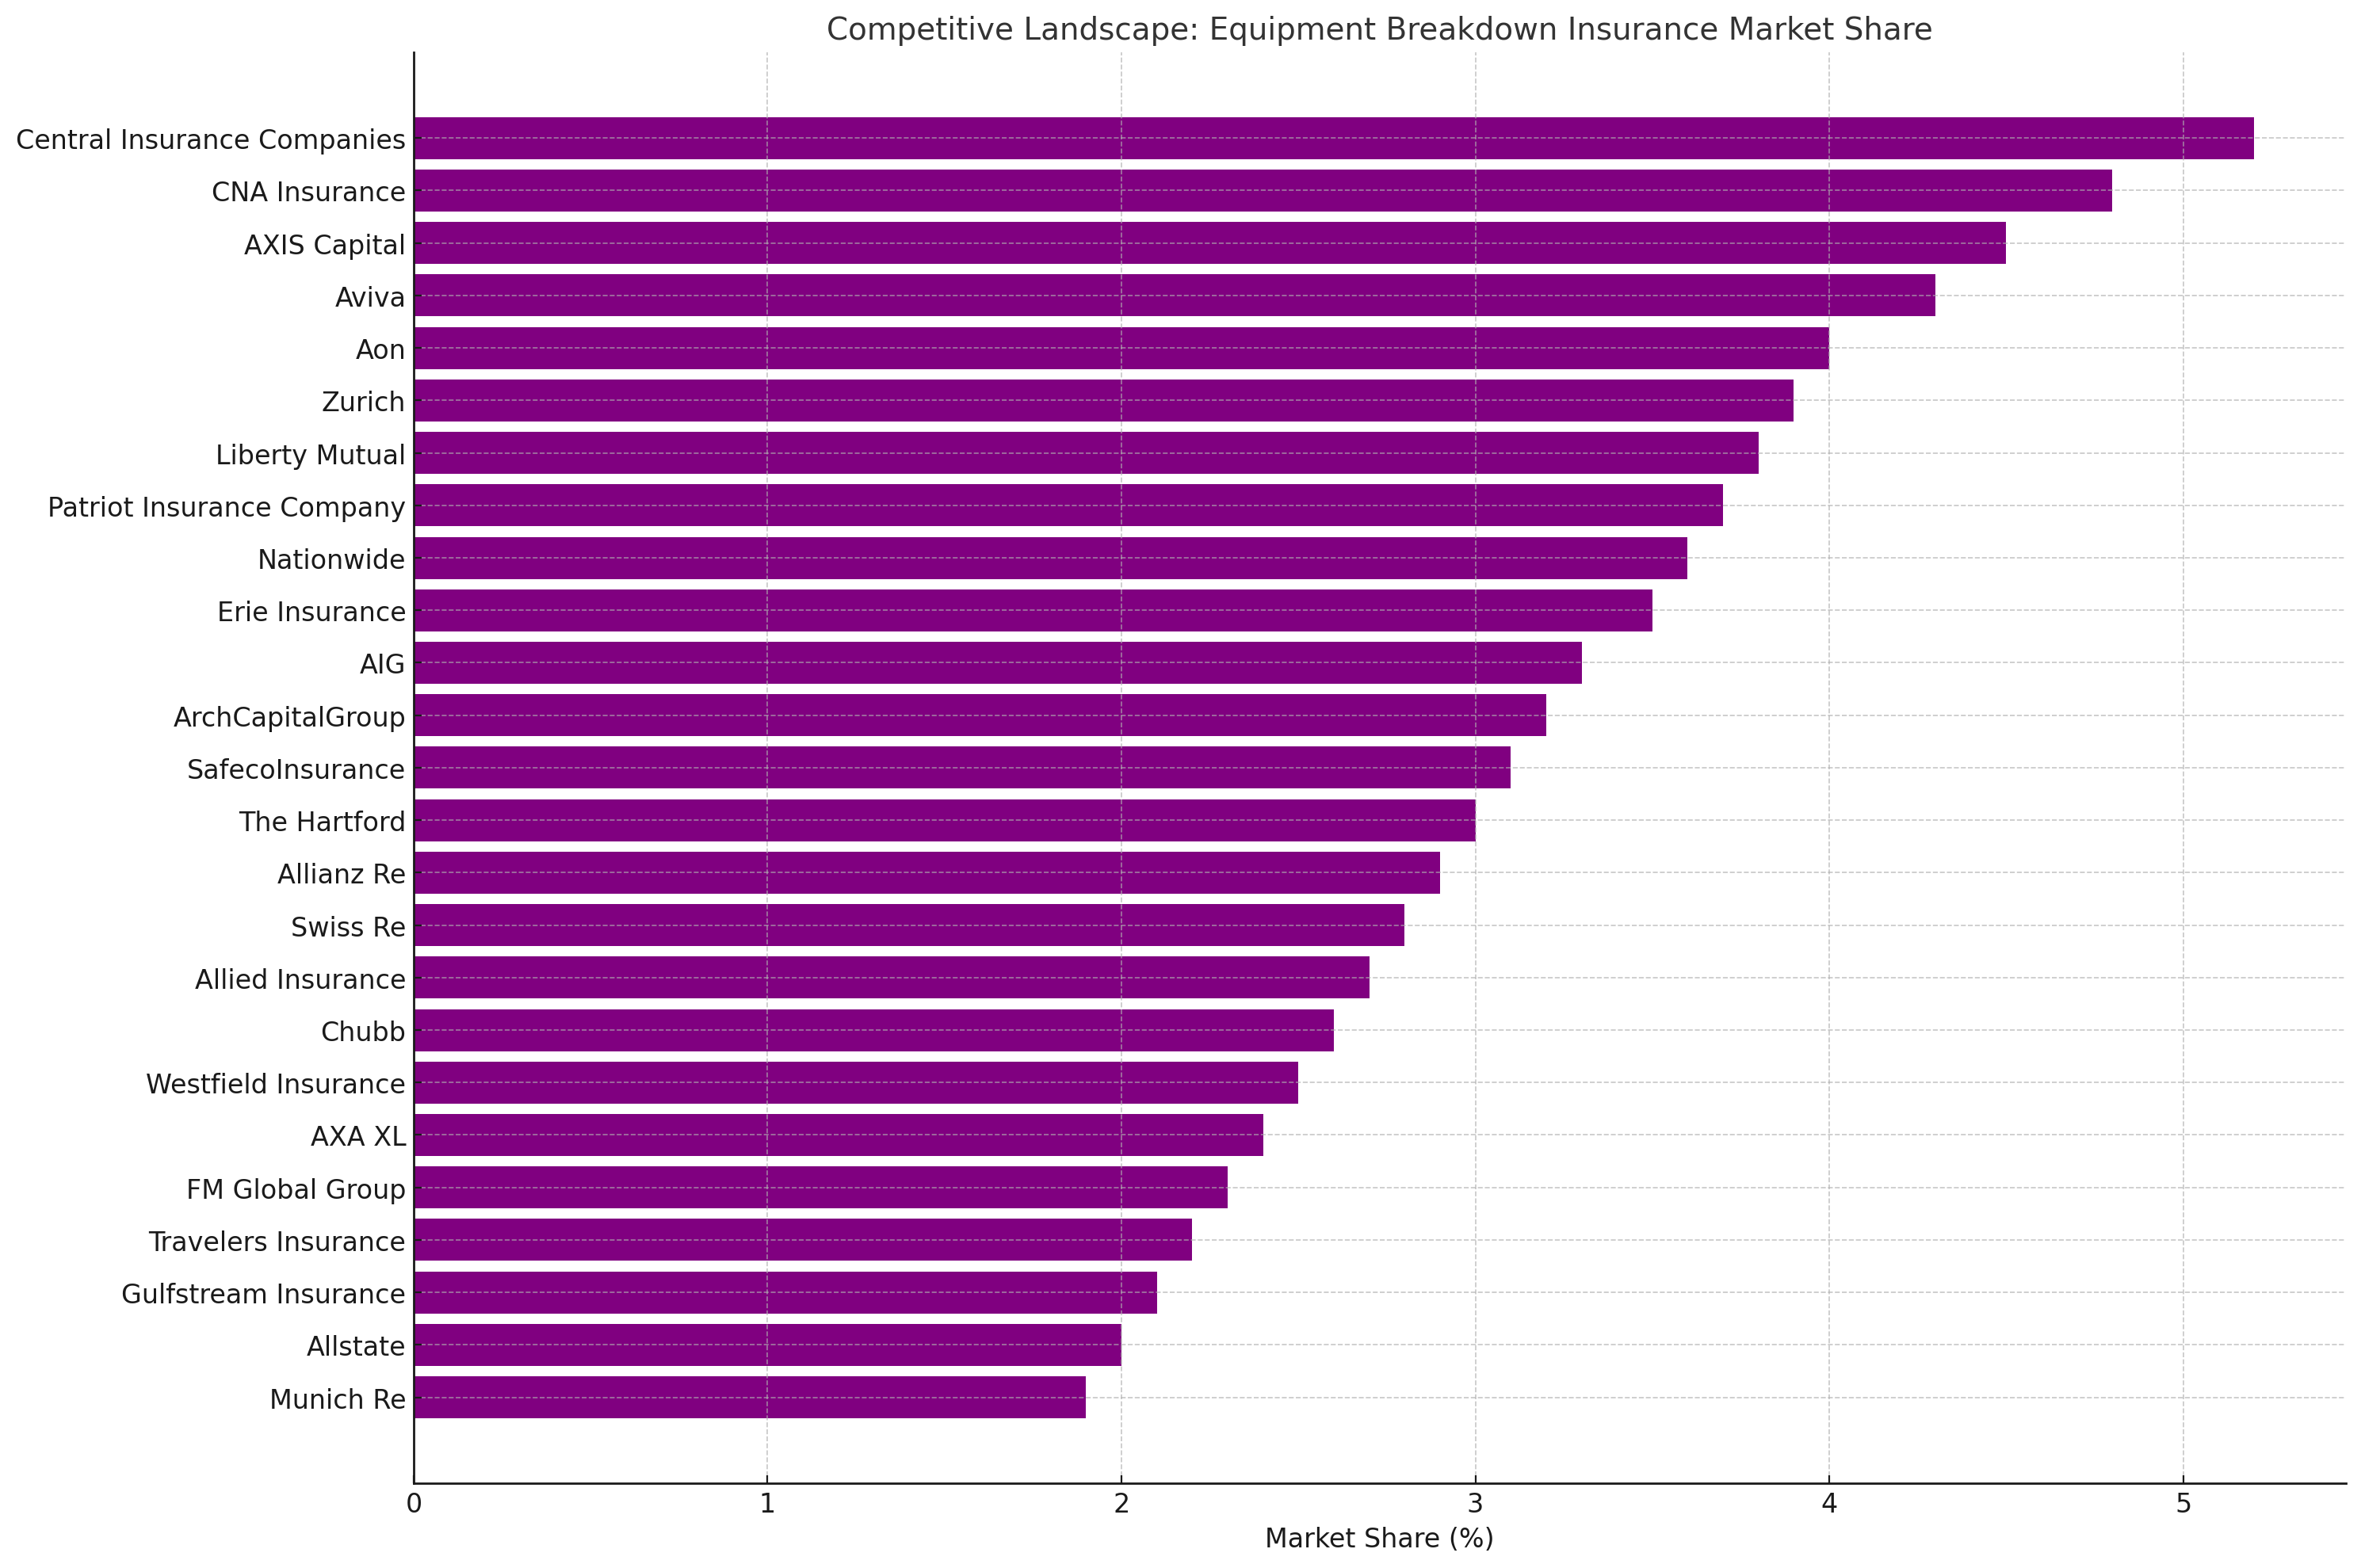 Competitve Landscape Visualization of Equipment Breakdown Insurance Market Share